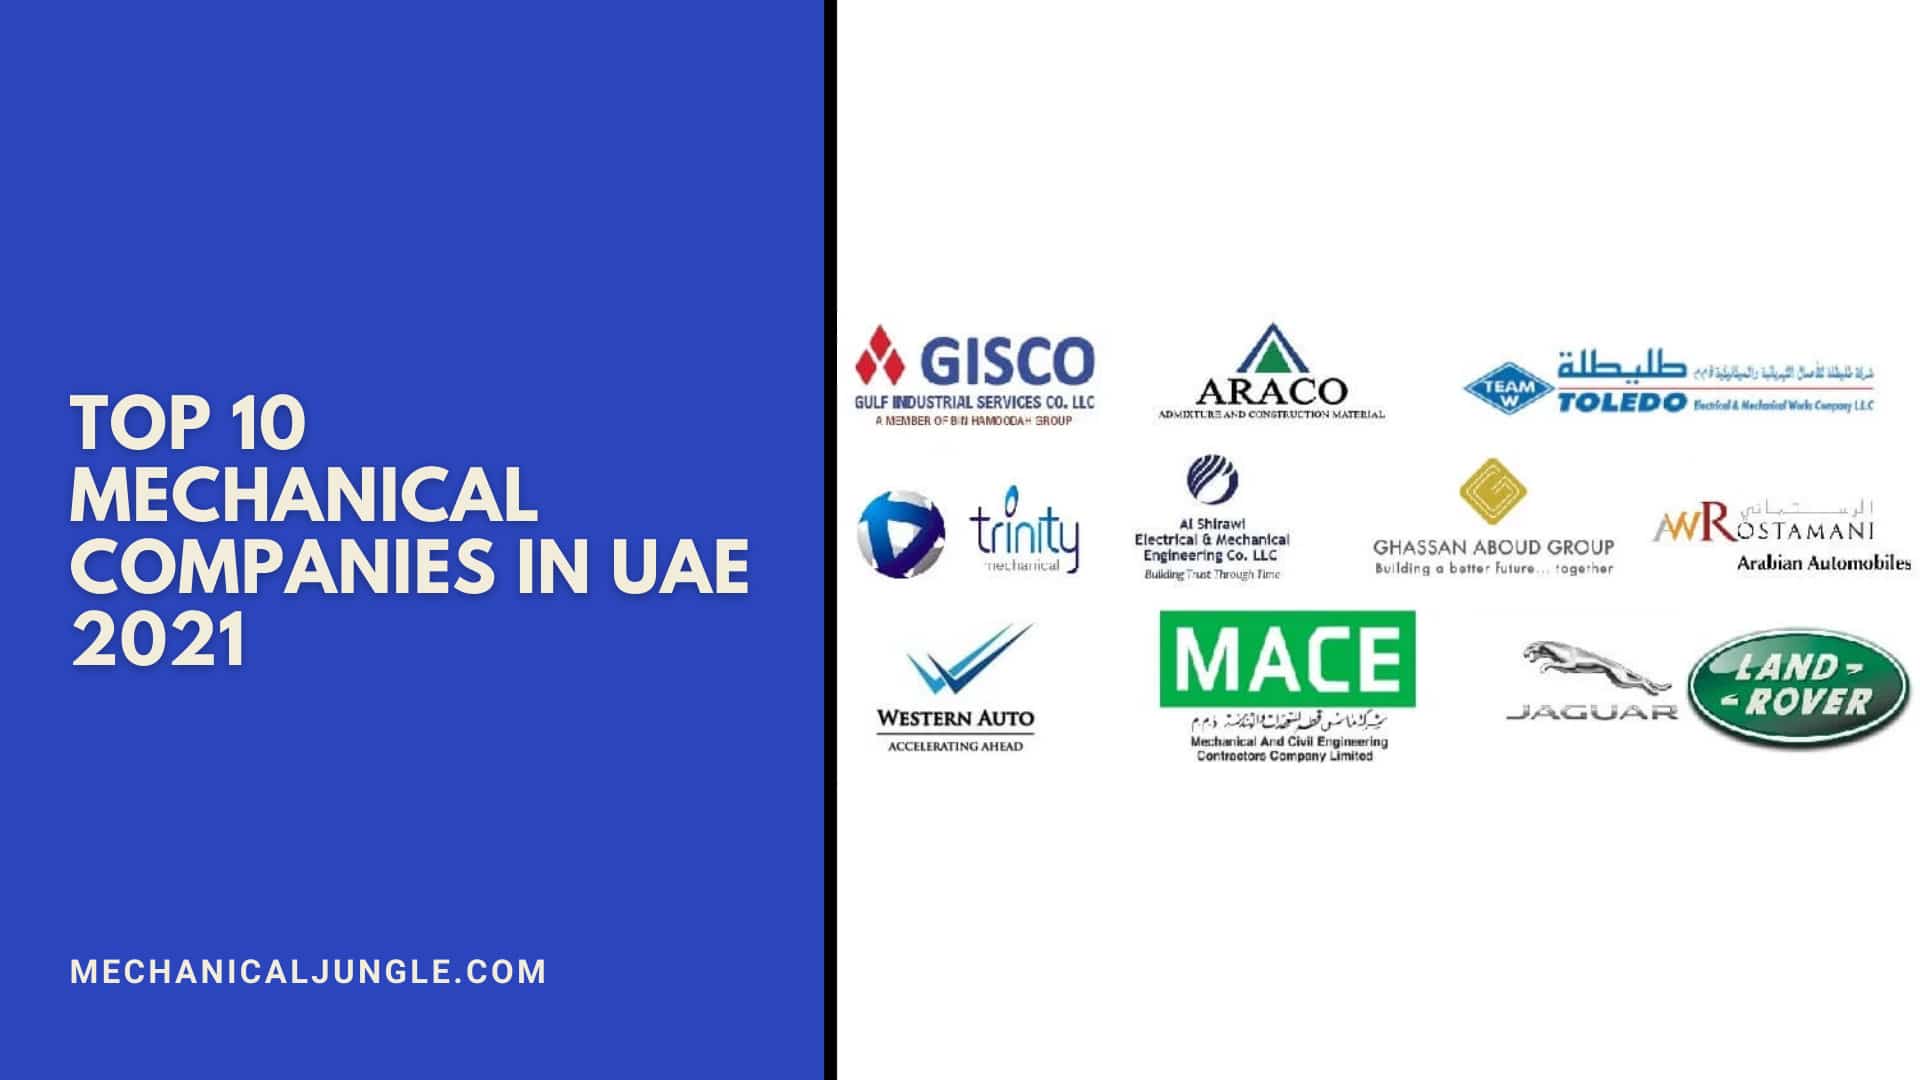 Top 10 Mechanical Companies in UAE 2021